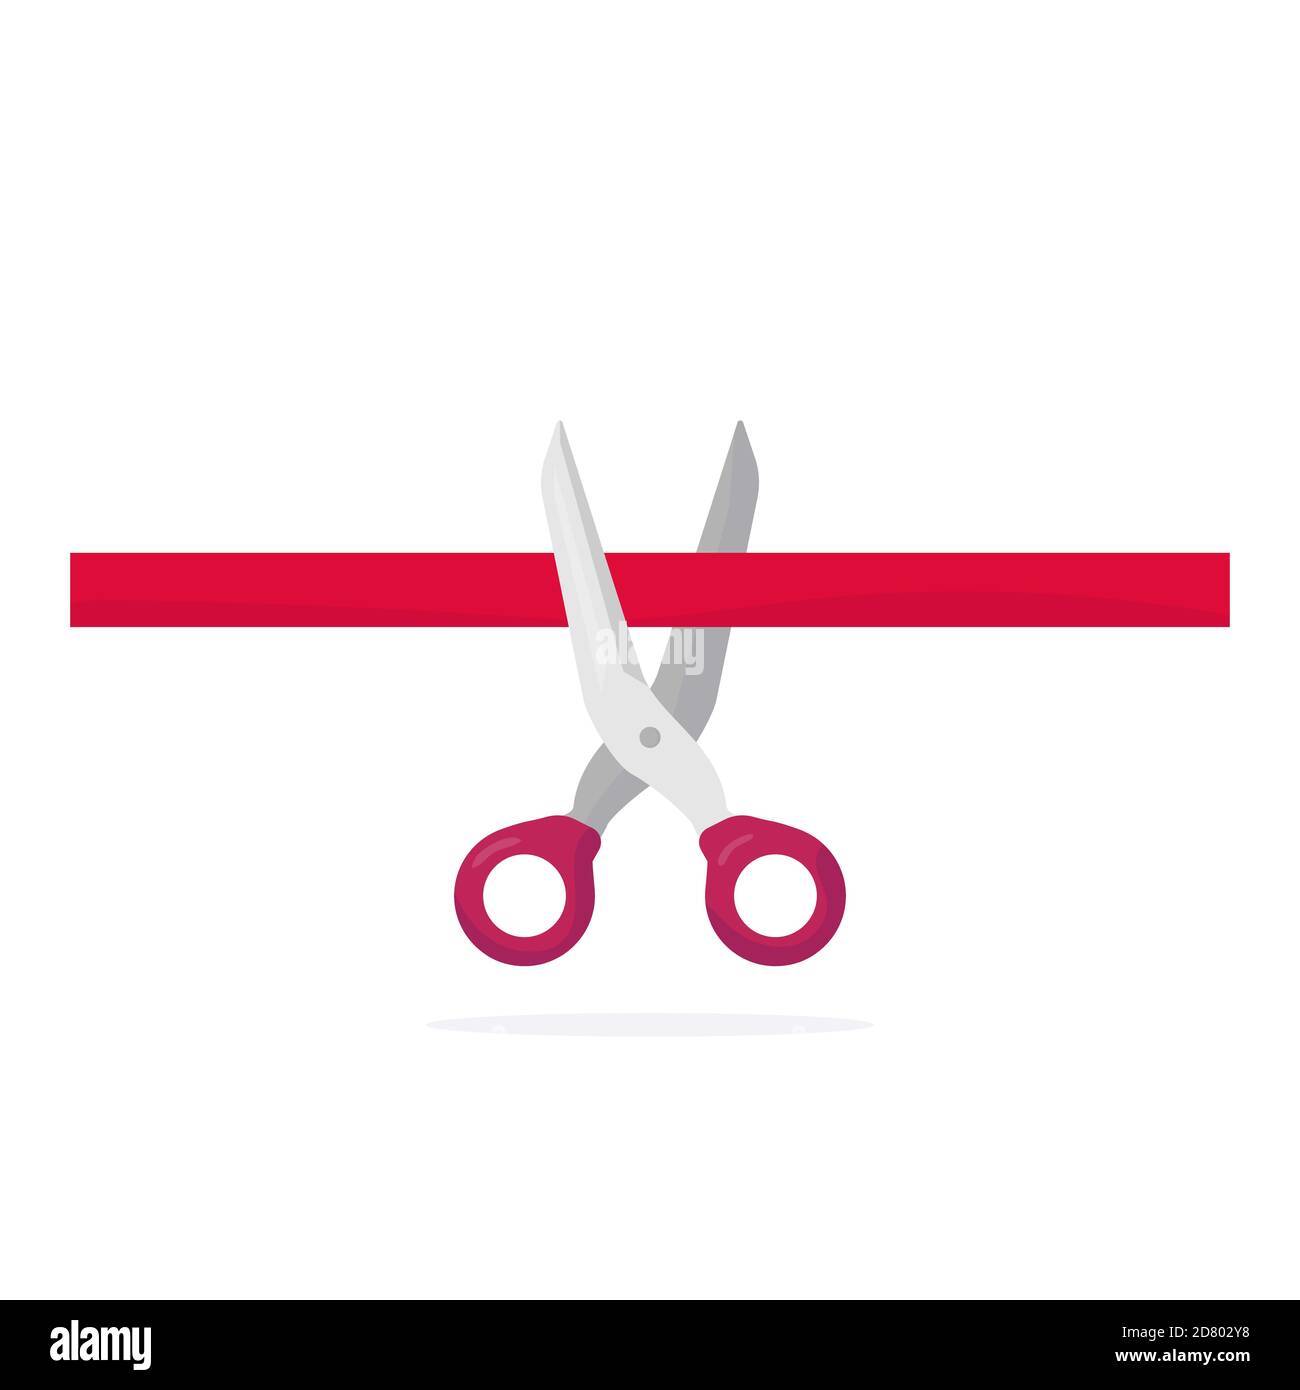 Pair of scissors Stock Vector Images - Alamy